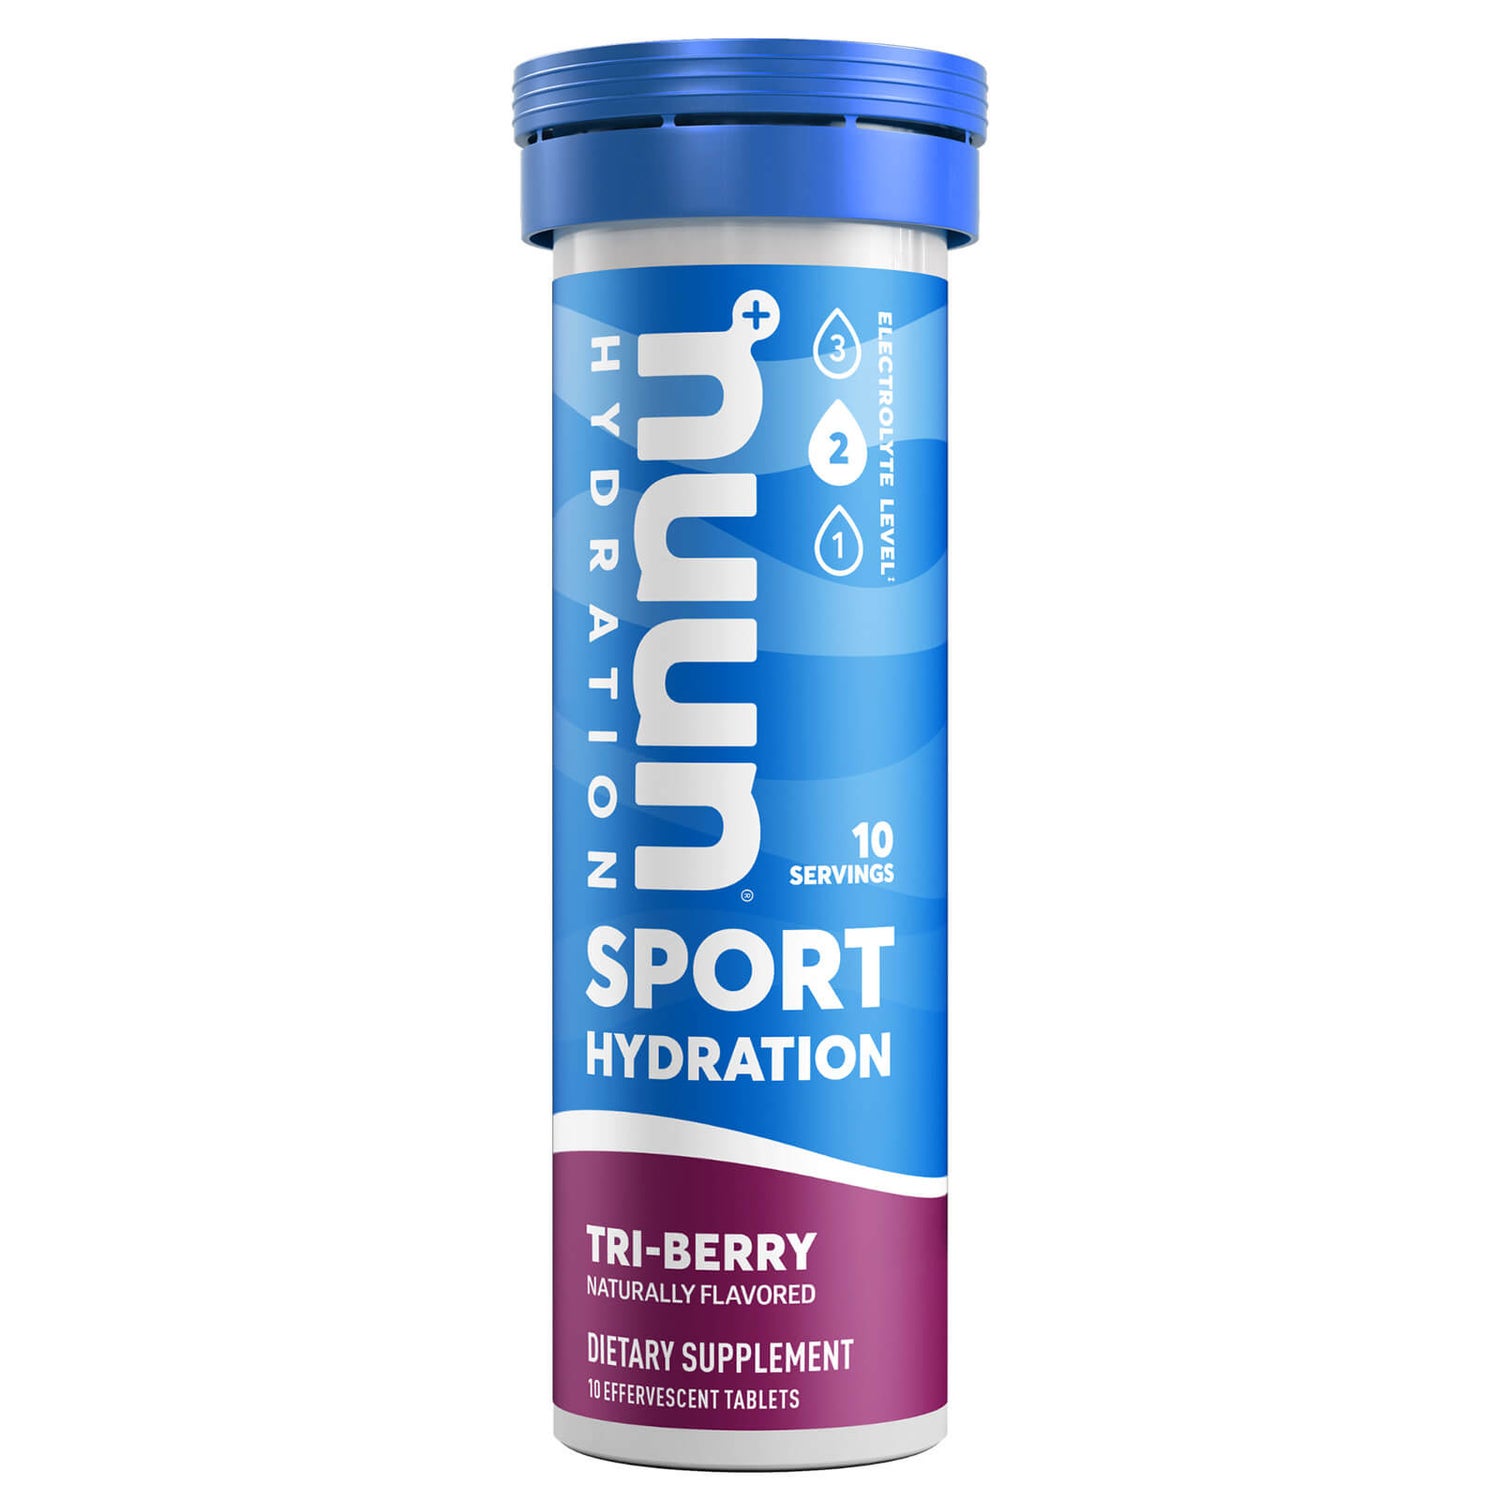 Nuun Sport Electrolyte Drink Tablets Tri-Berry - 10 Servings